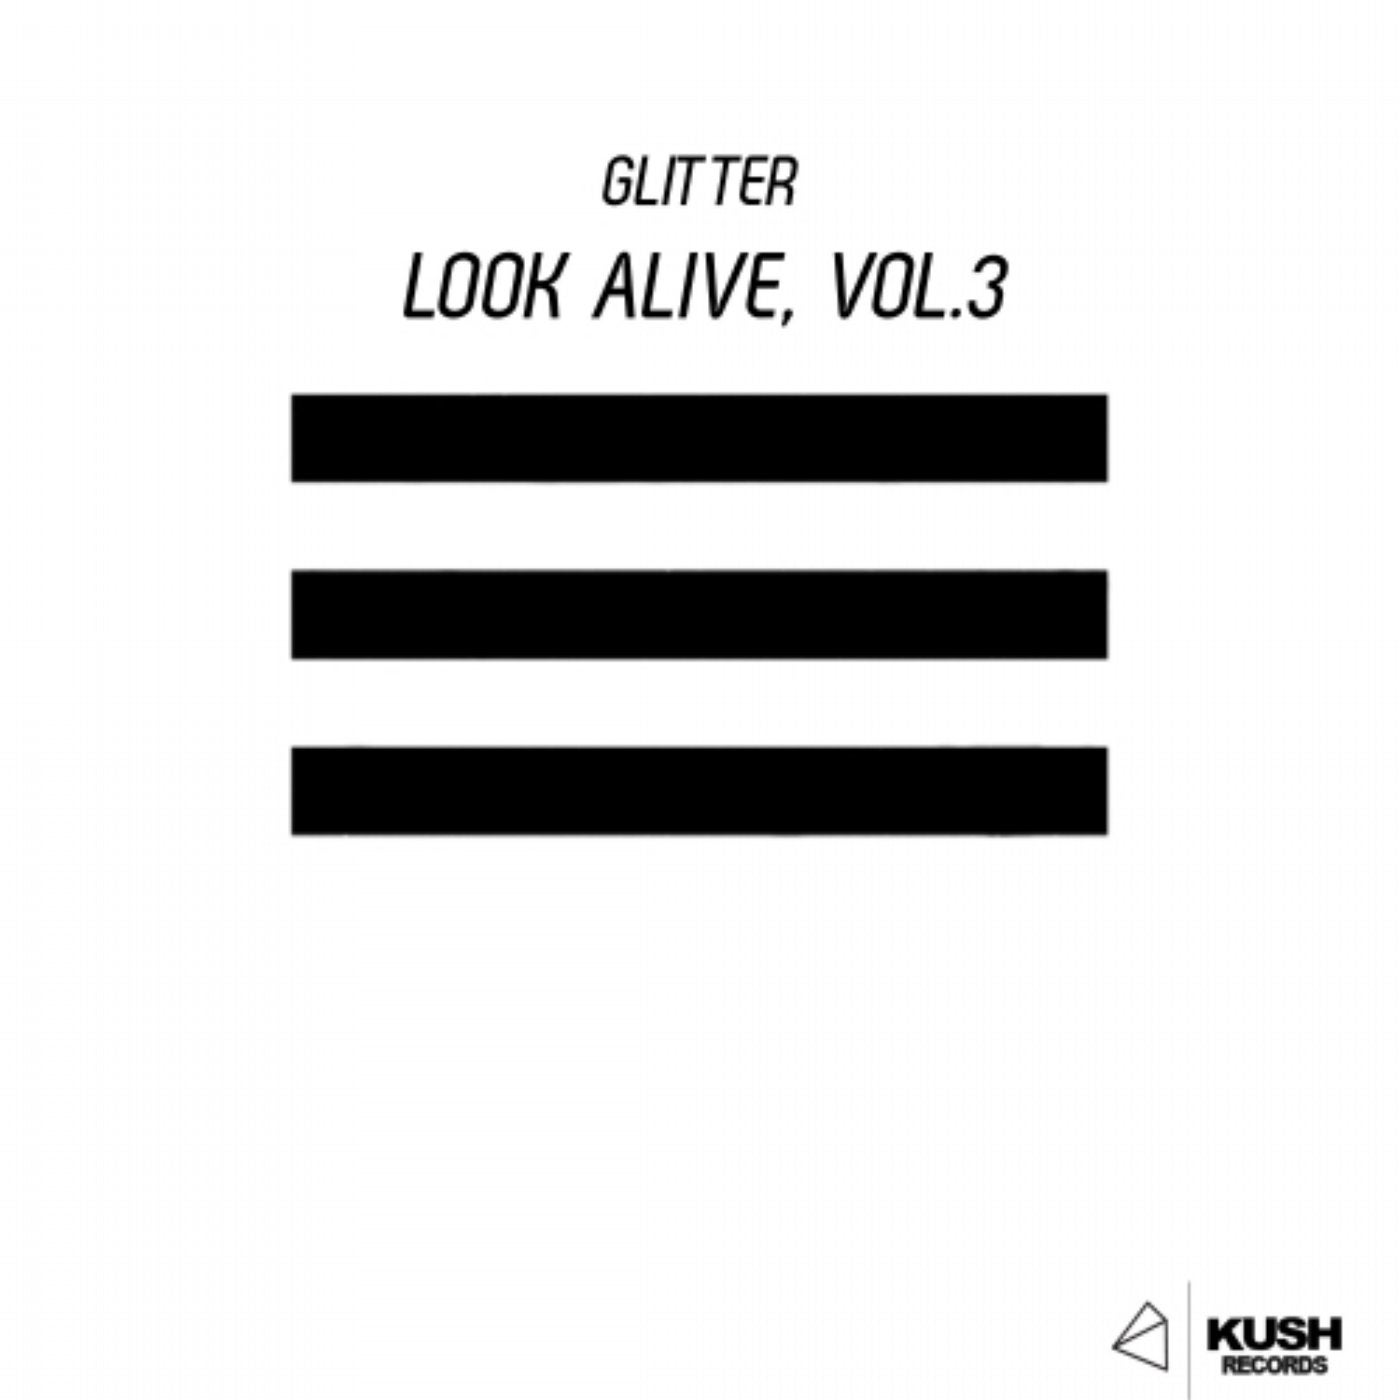 Look Alive, Vol. 3